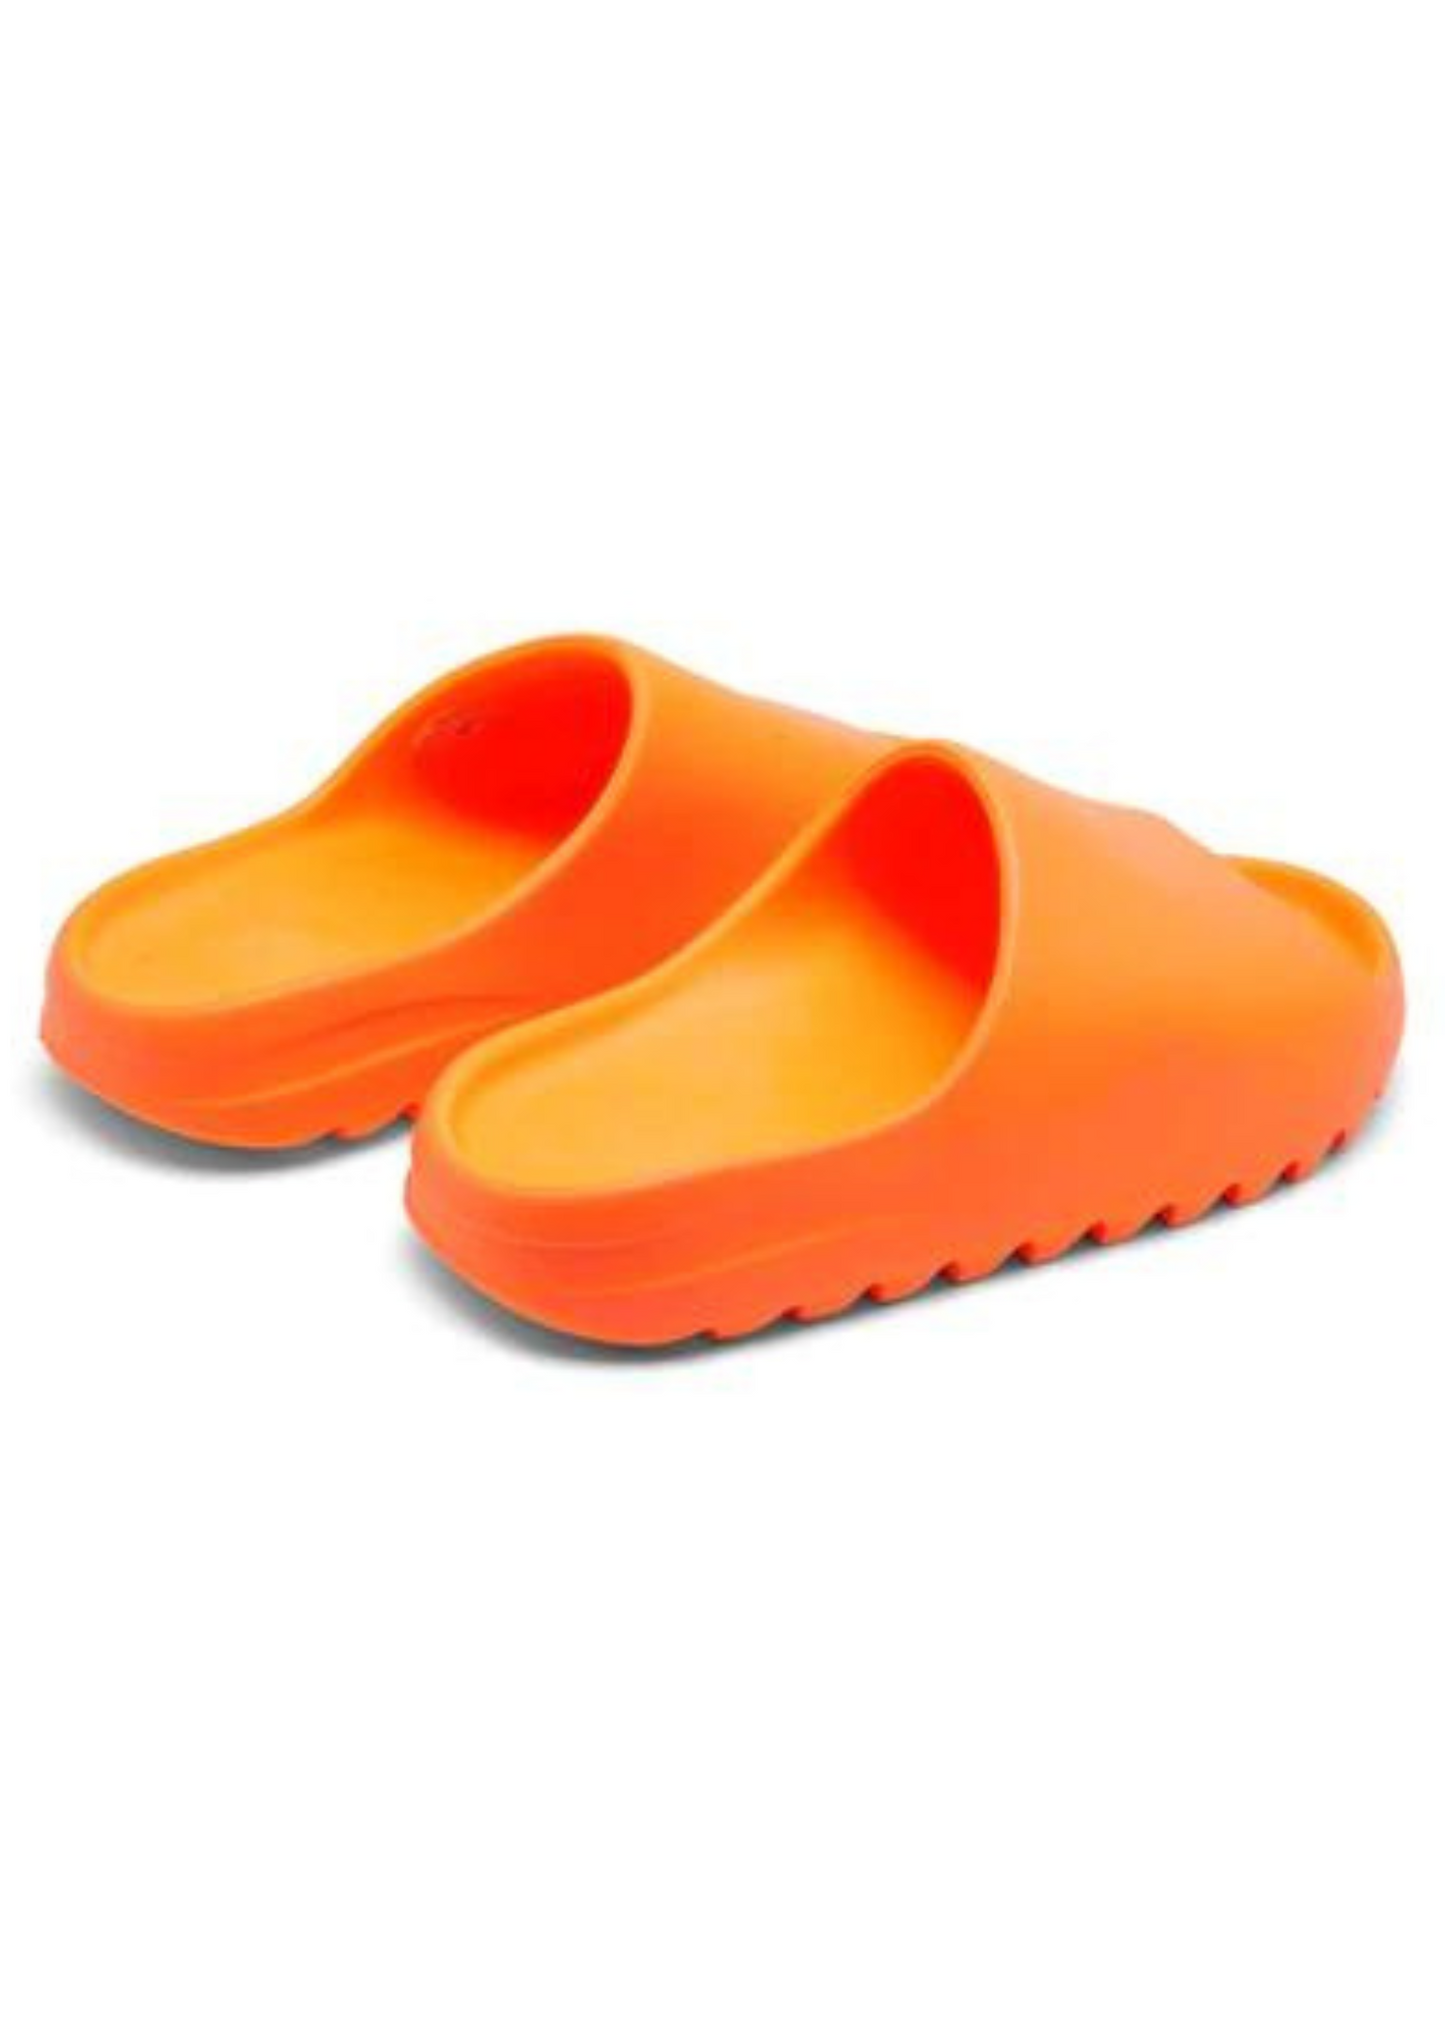 Adidas Yeezy Slides - ENFLAME ORANGE